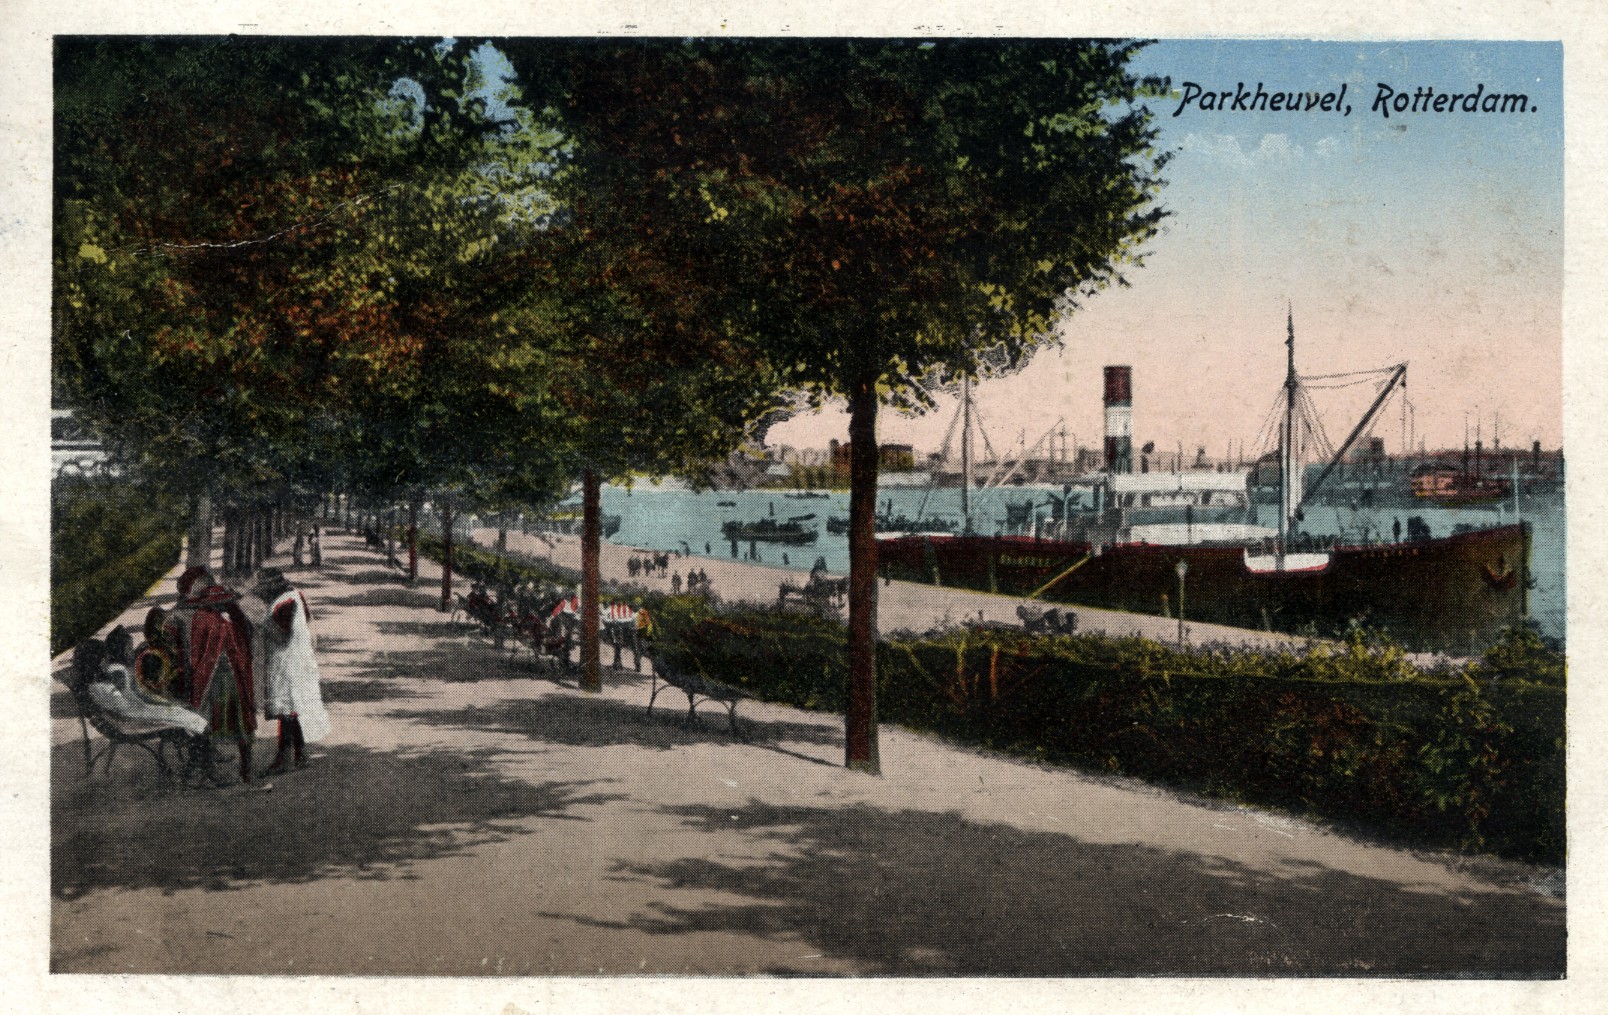 Rotterdam, 1924: Parkheuvel